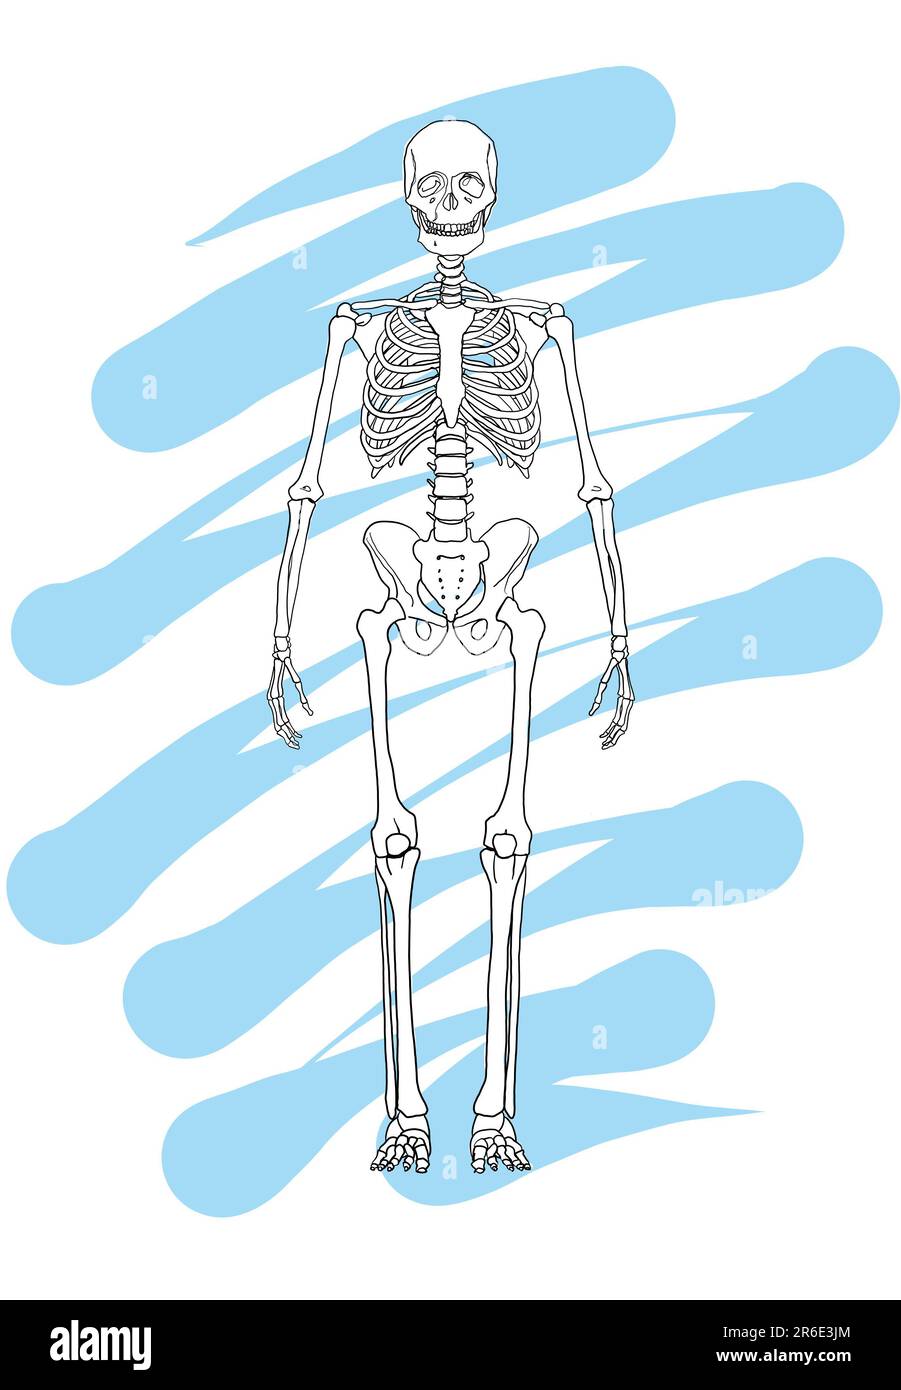 Skeleton Line Drawing Spaceman Hand Drawn Blue Splash Graphic Retro Illustration Overlay Layer Illustration Stock Photo